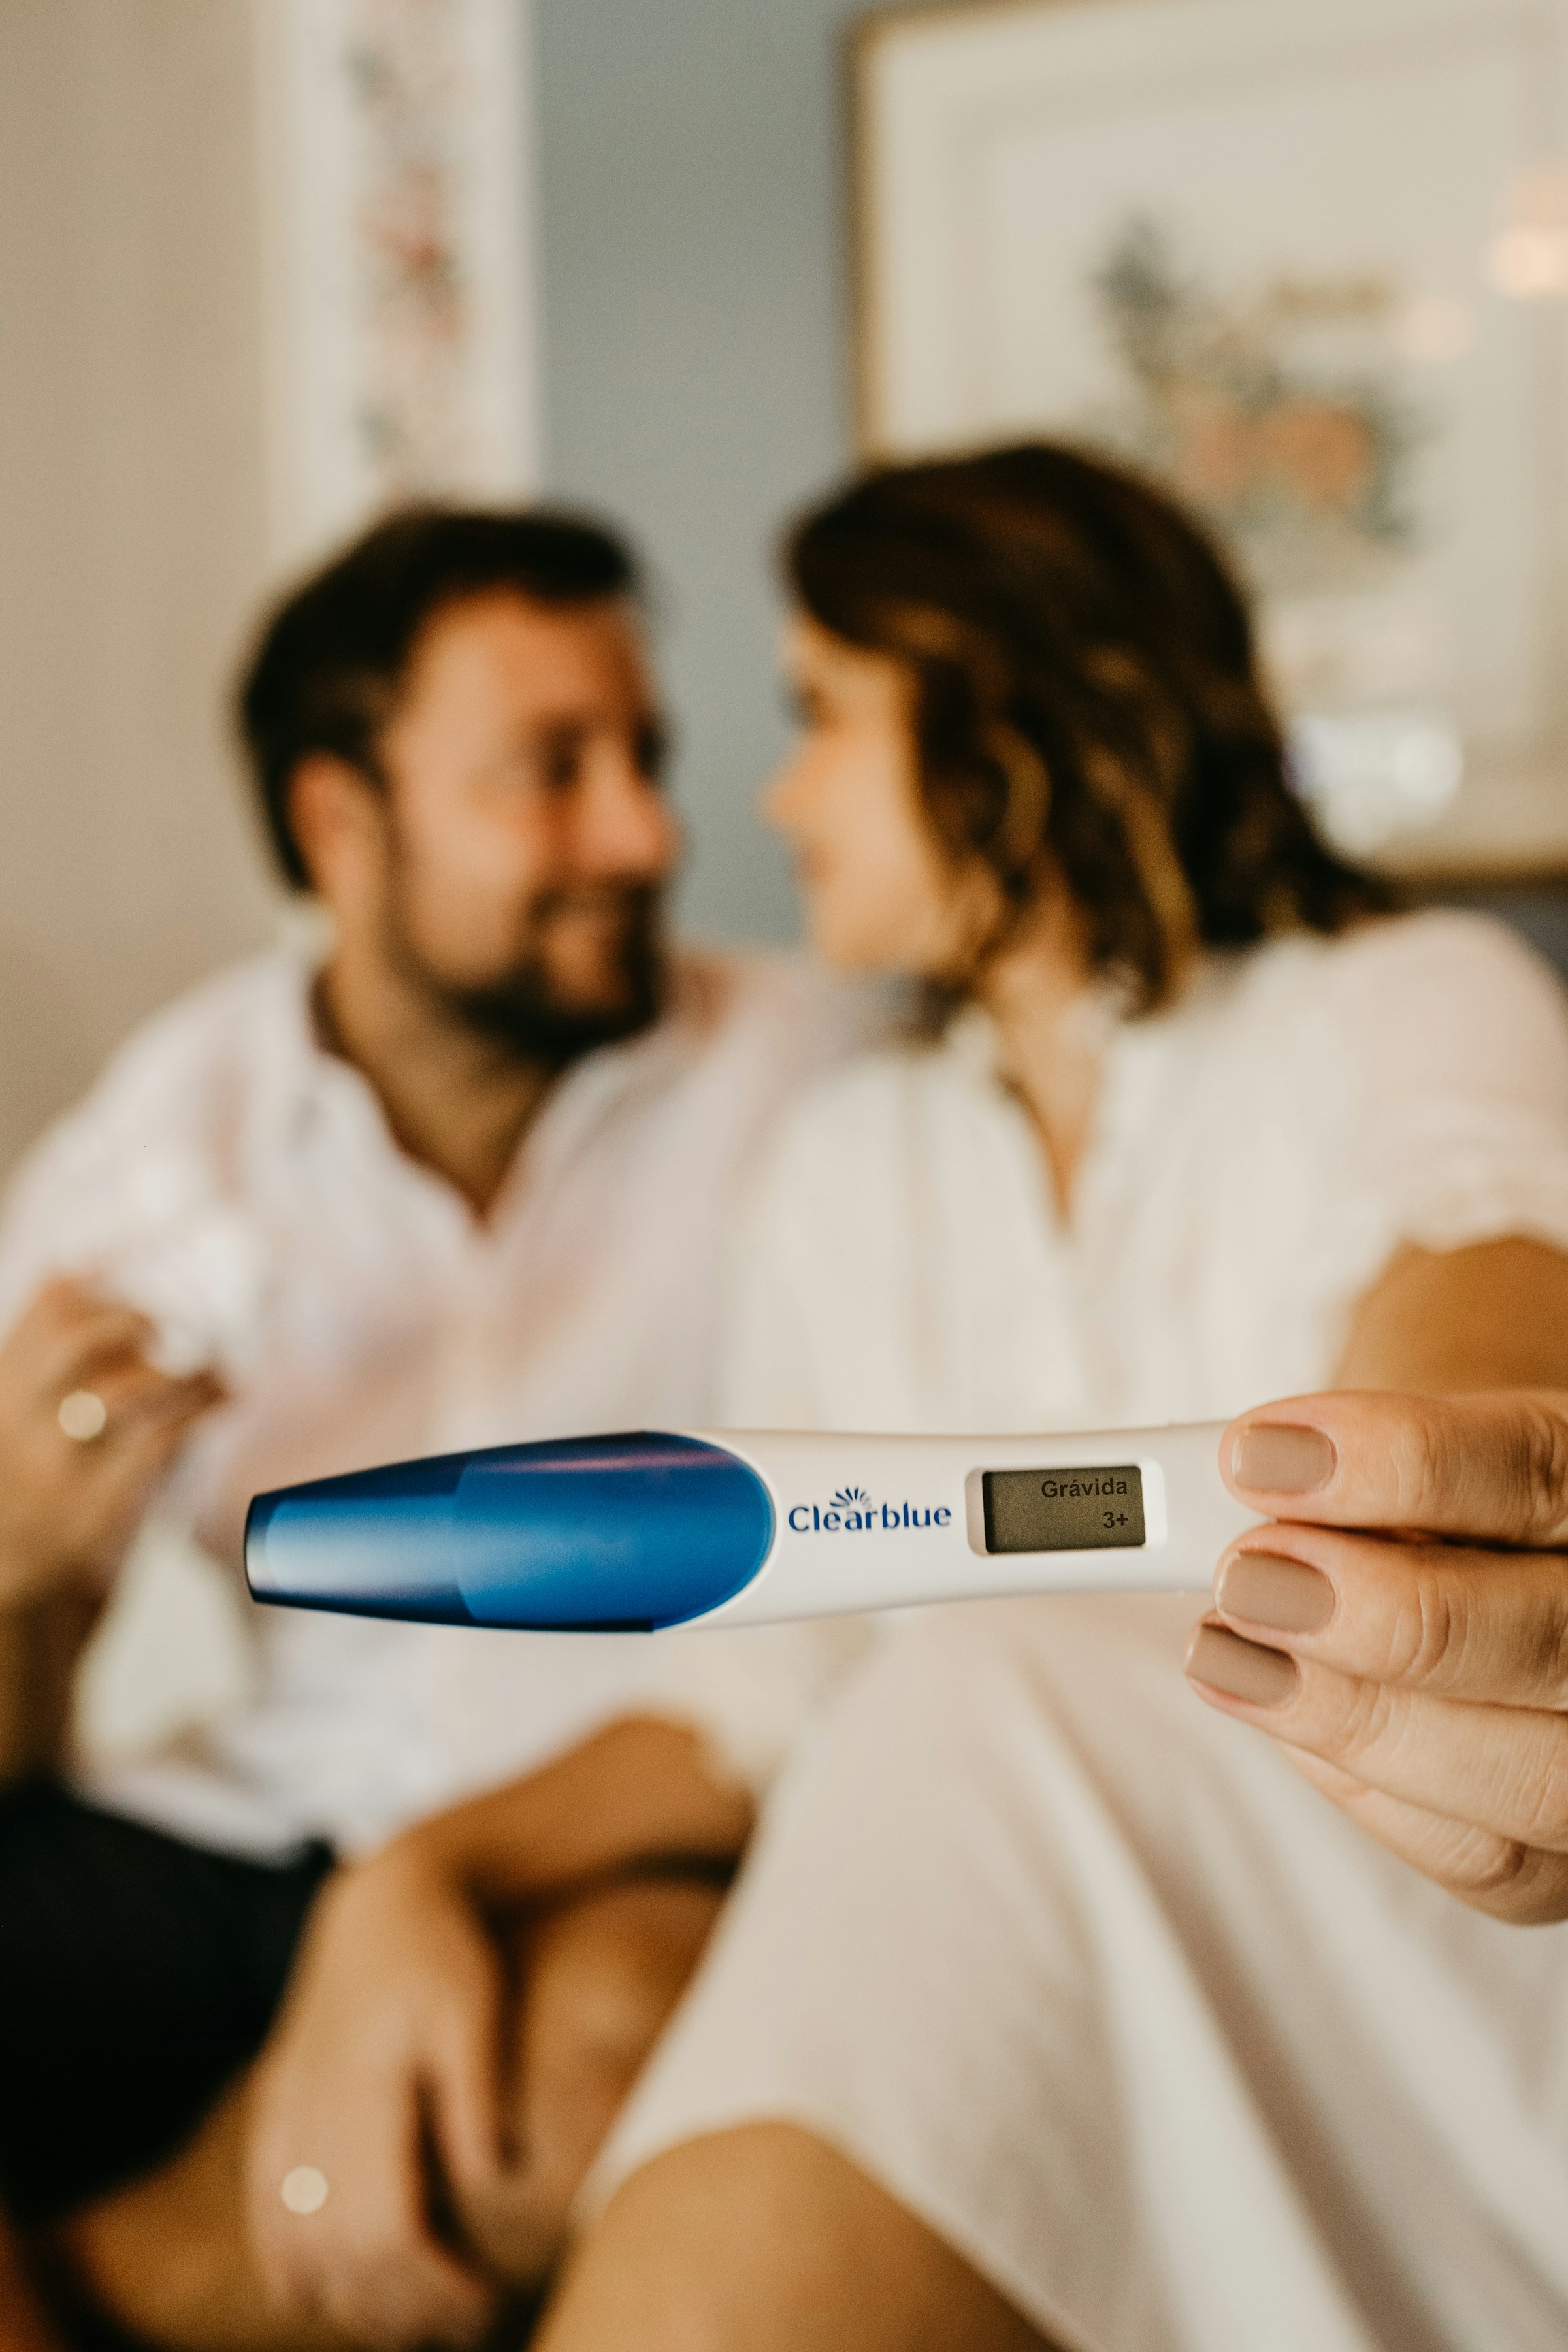 A couple holding a pregnancy test | Source: Unsplash